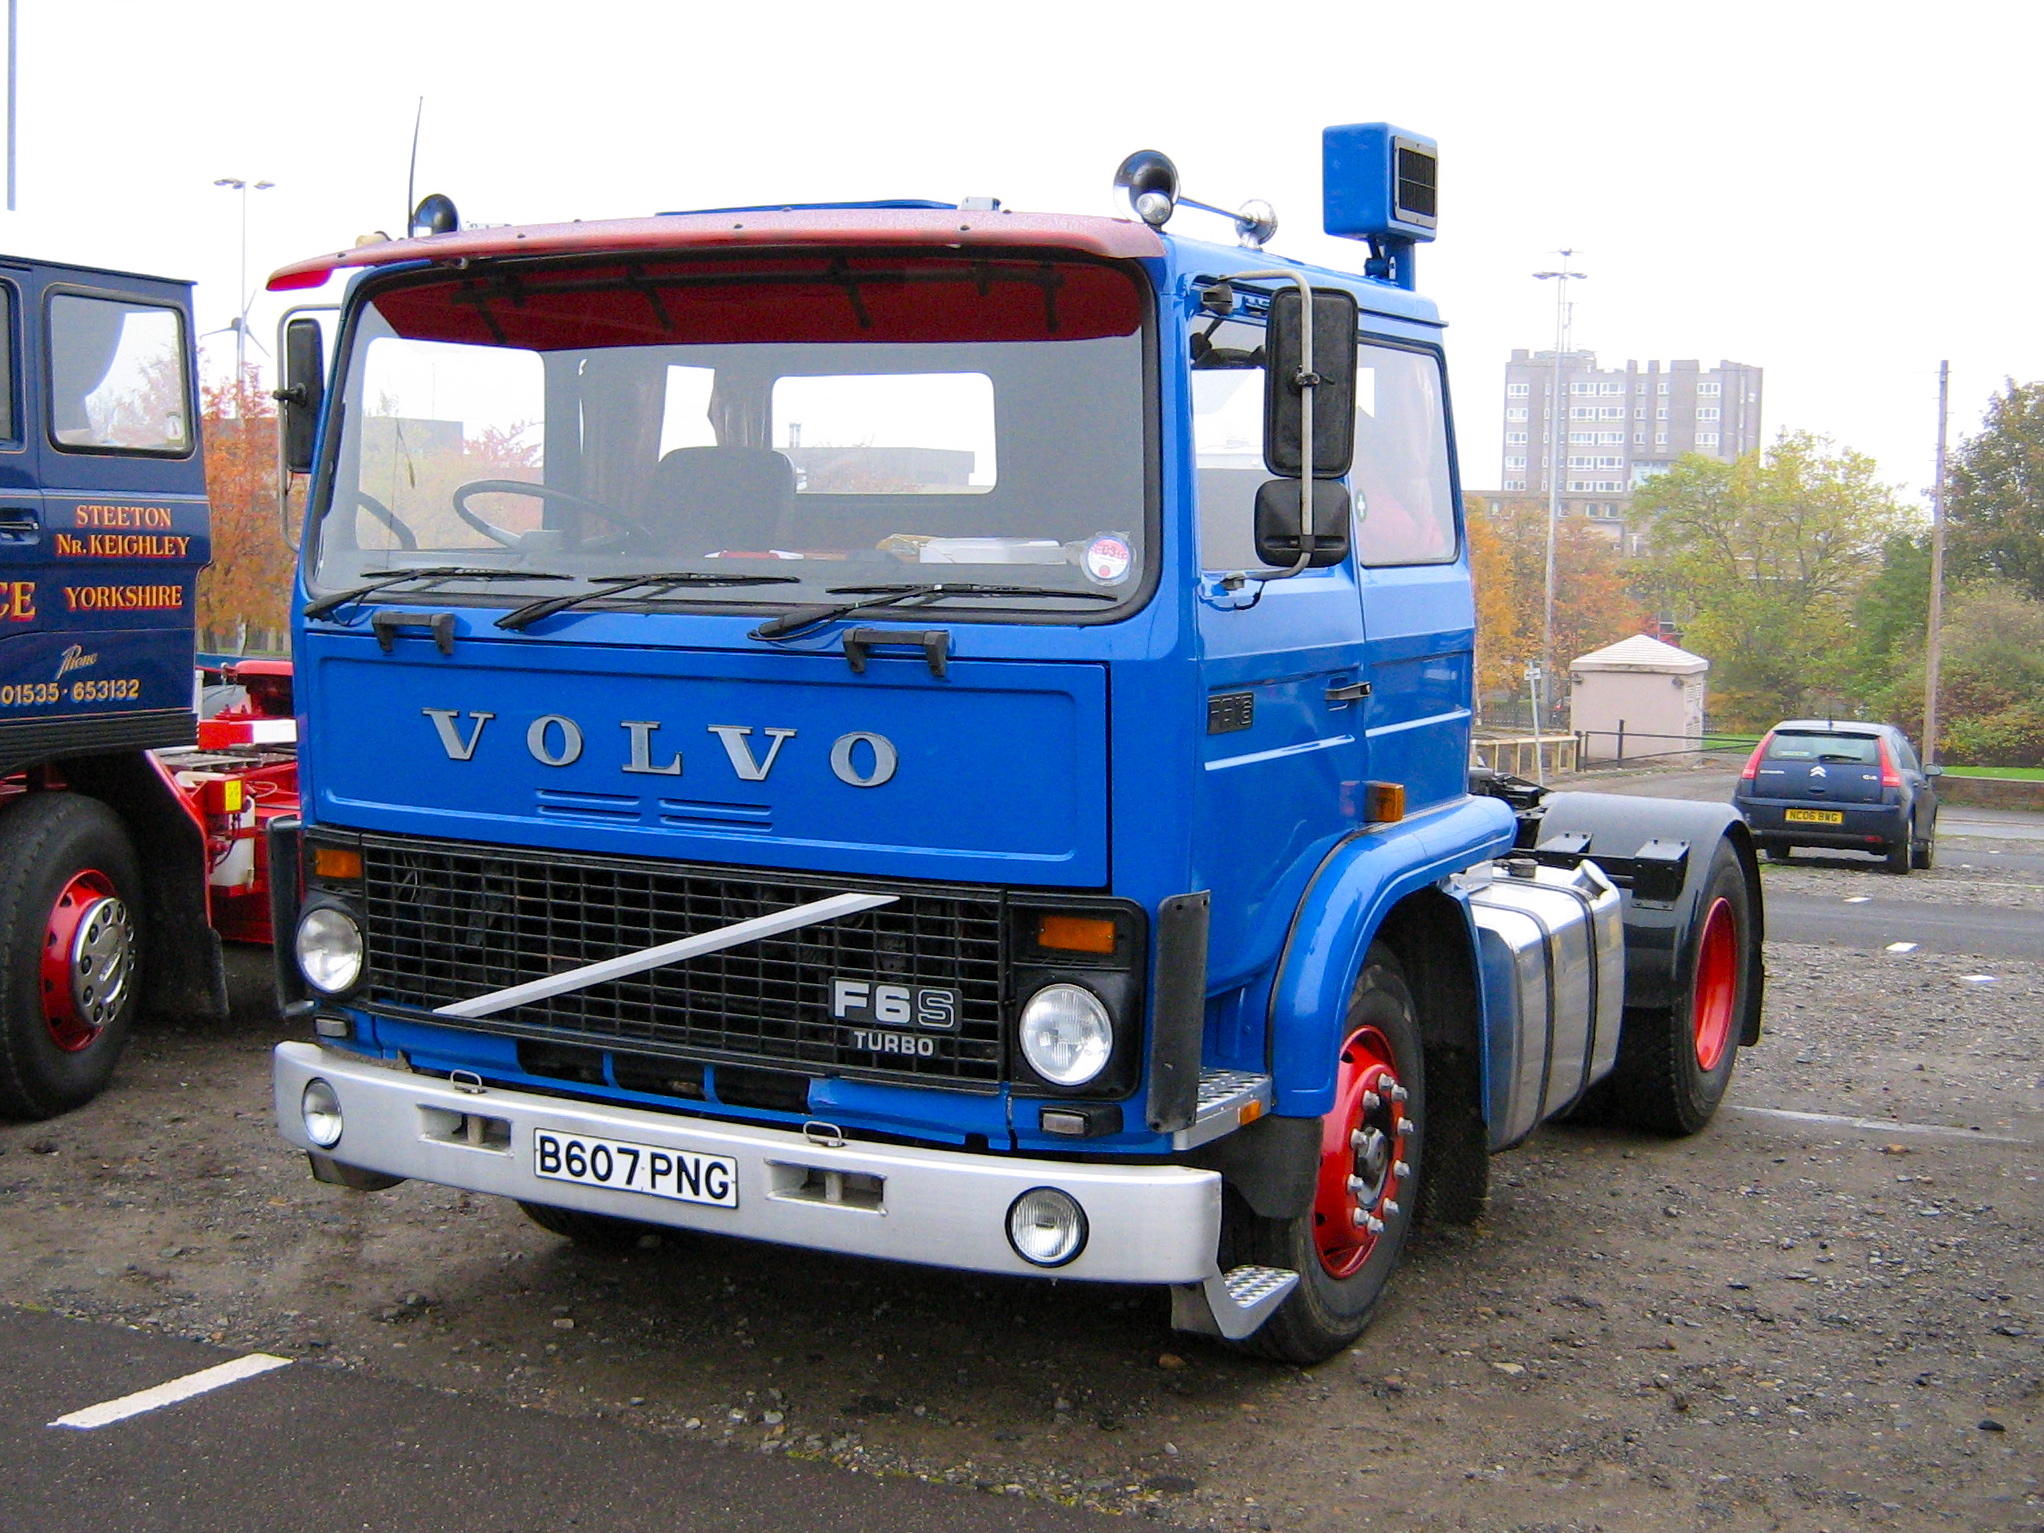 Volvo F6 Tractor unit | Flickr - Photo Sharing!